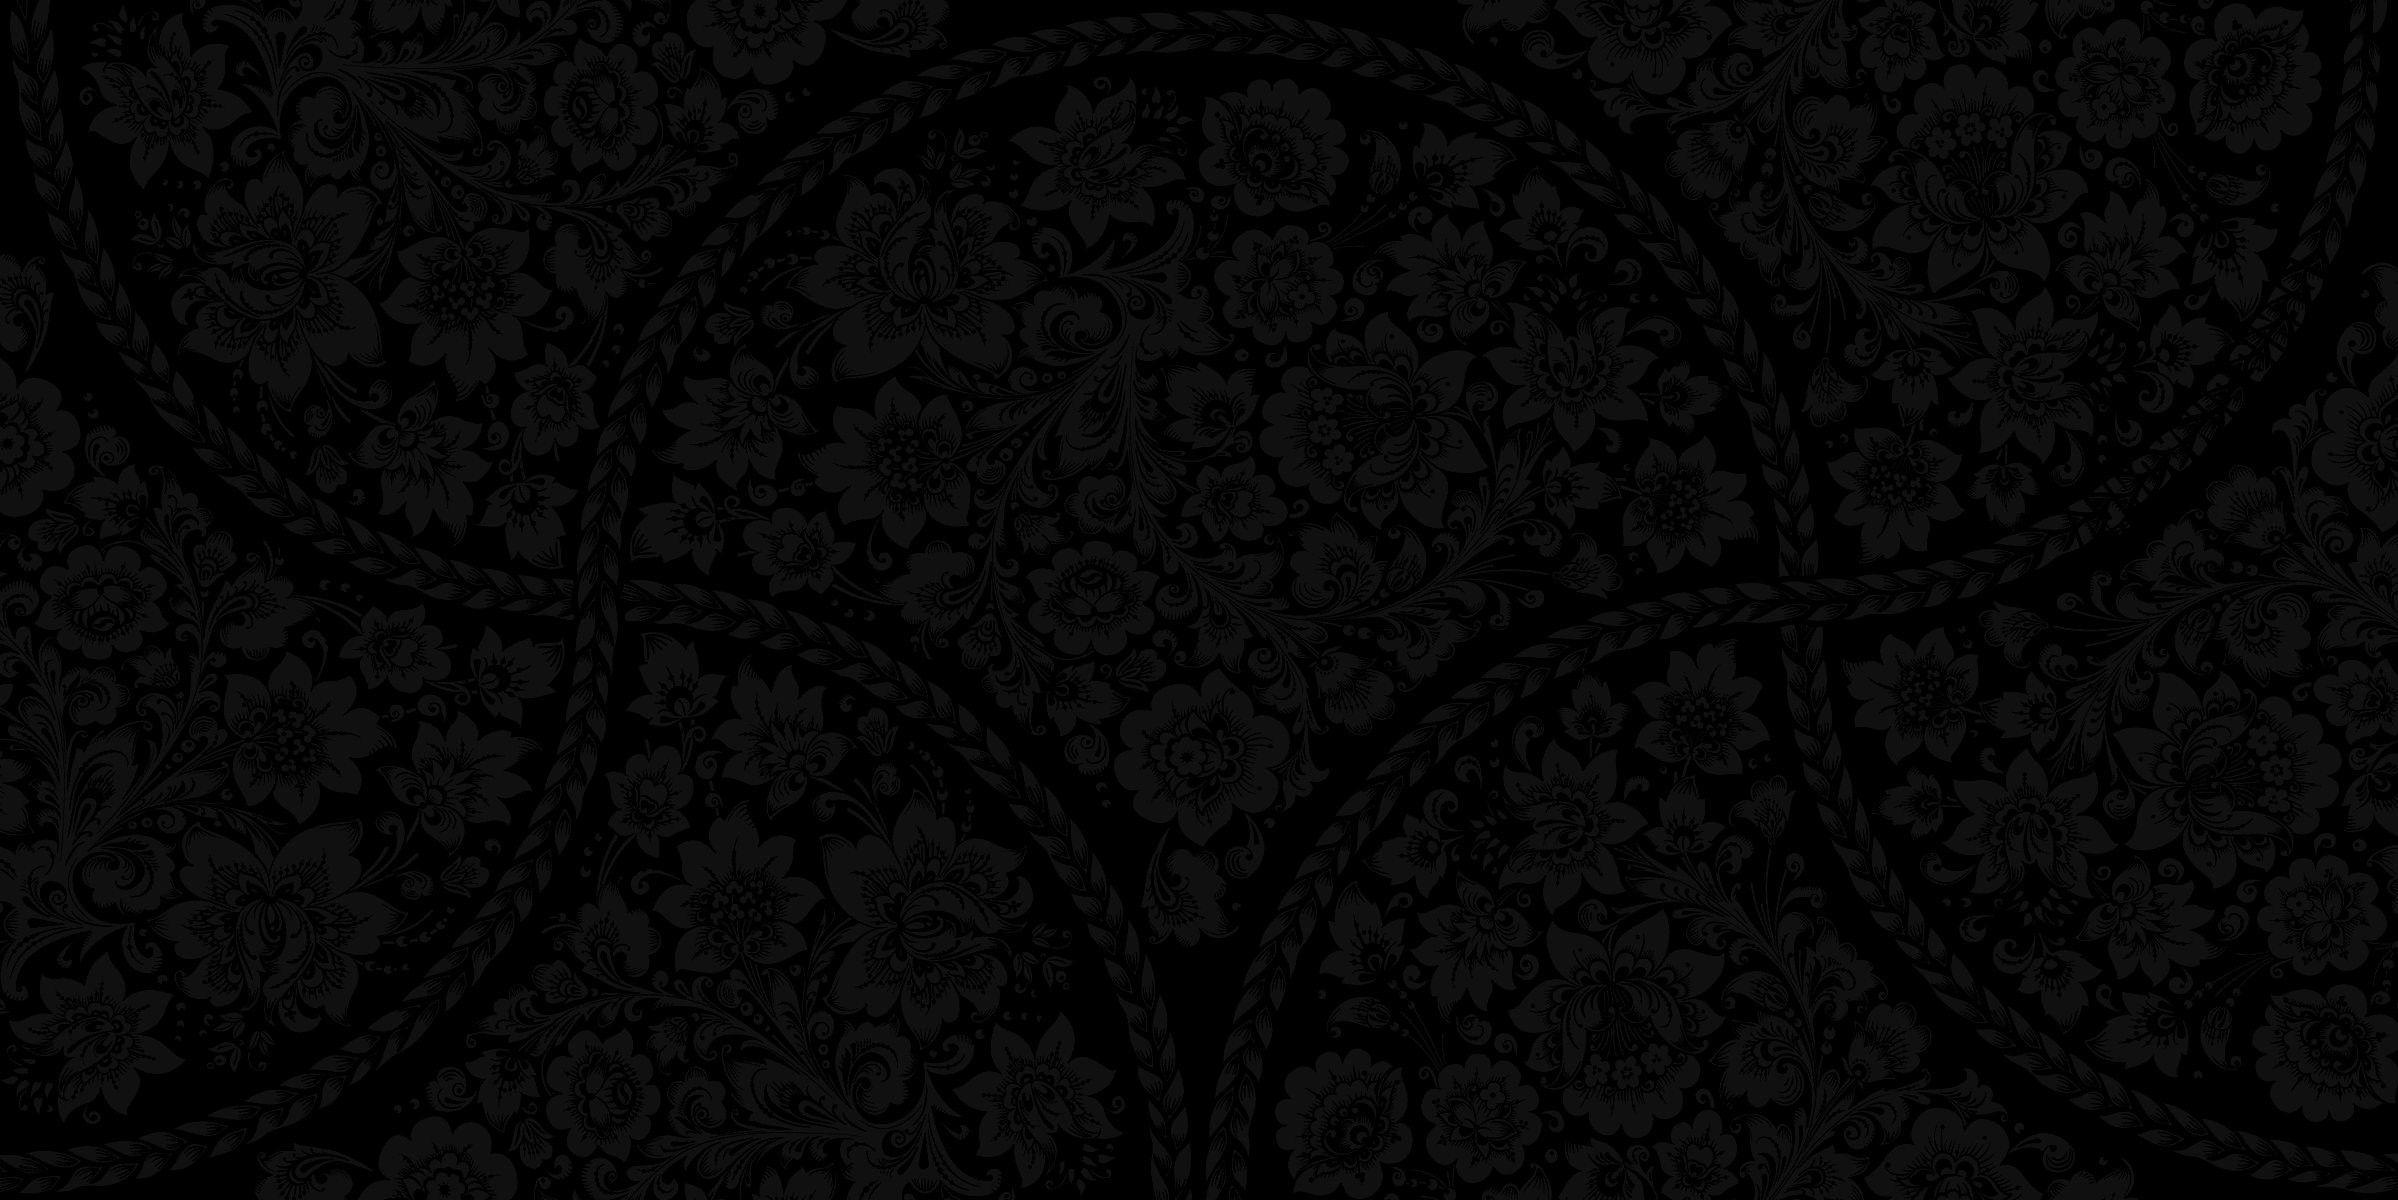 Black background TumblrDownload free wallpaper for desktop